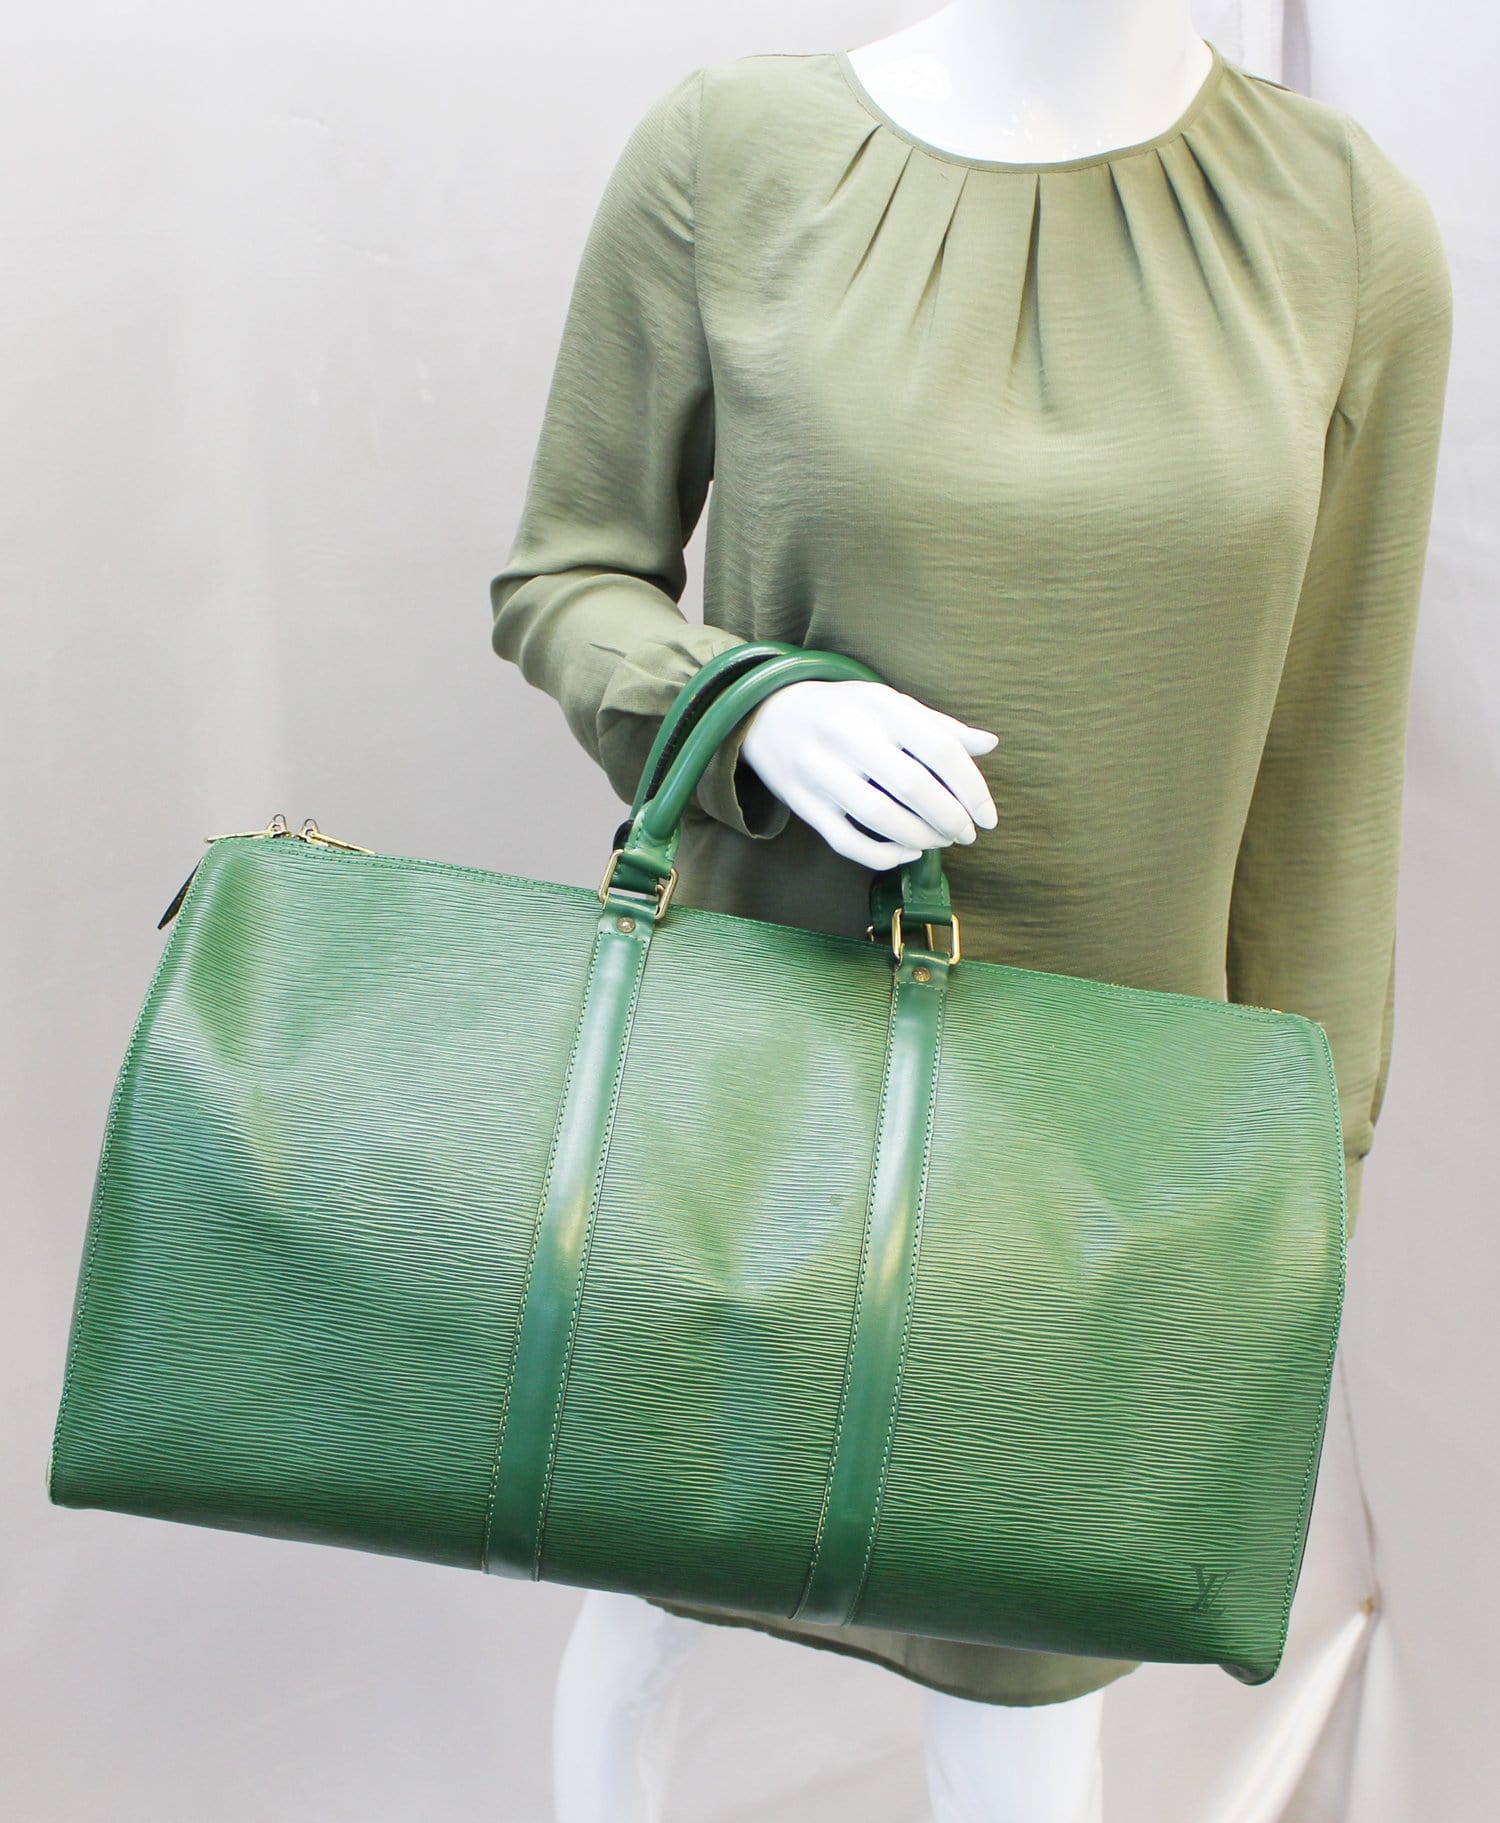 Louis Vuitton Keepall 50 Green EPI Leather Travel Bag